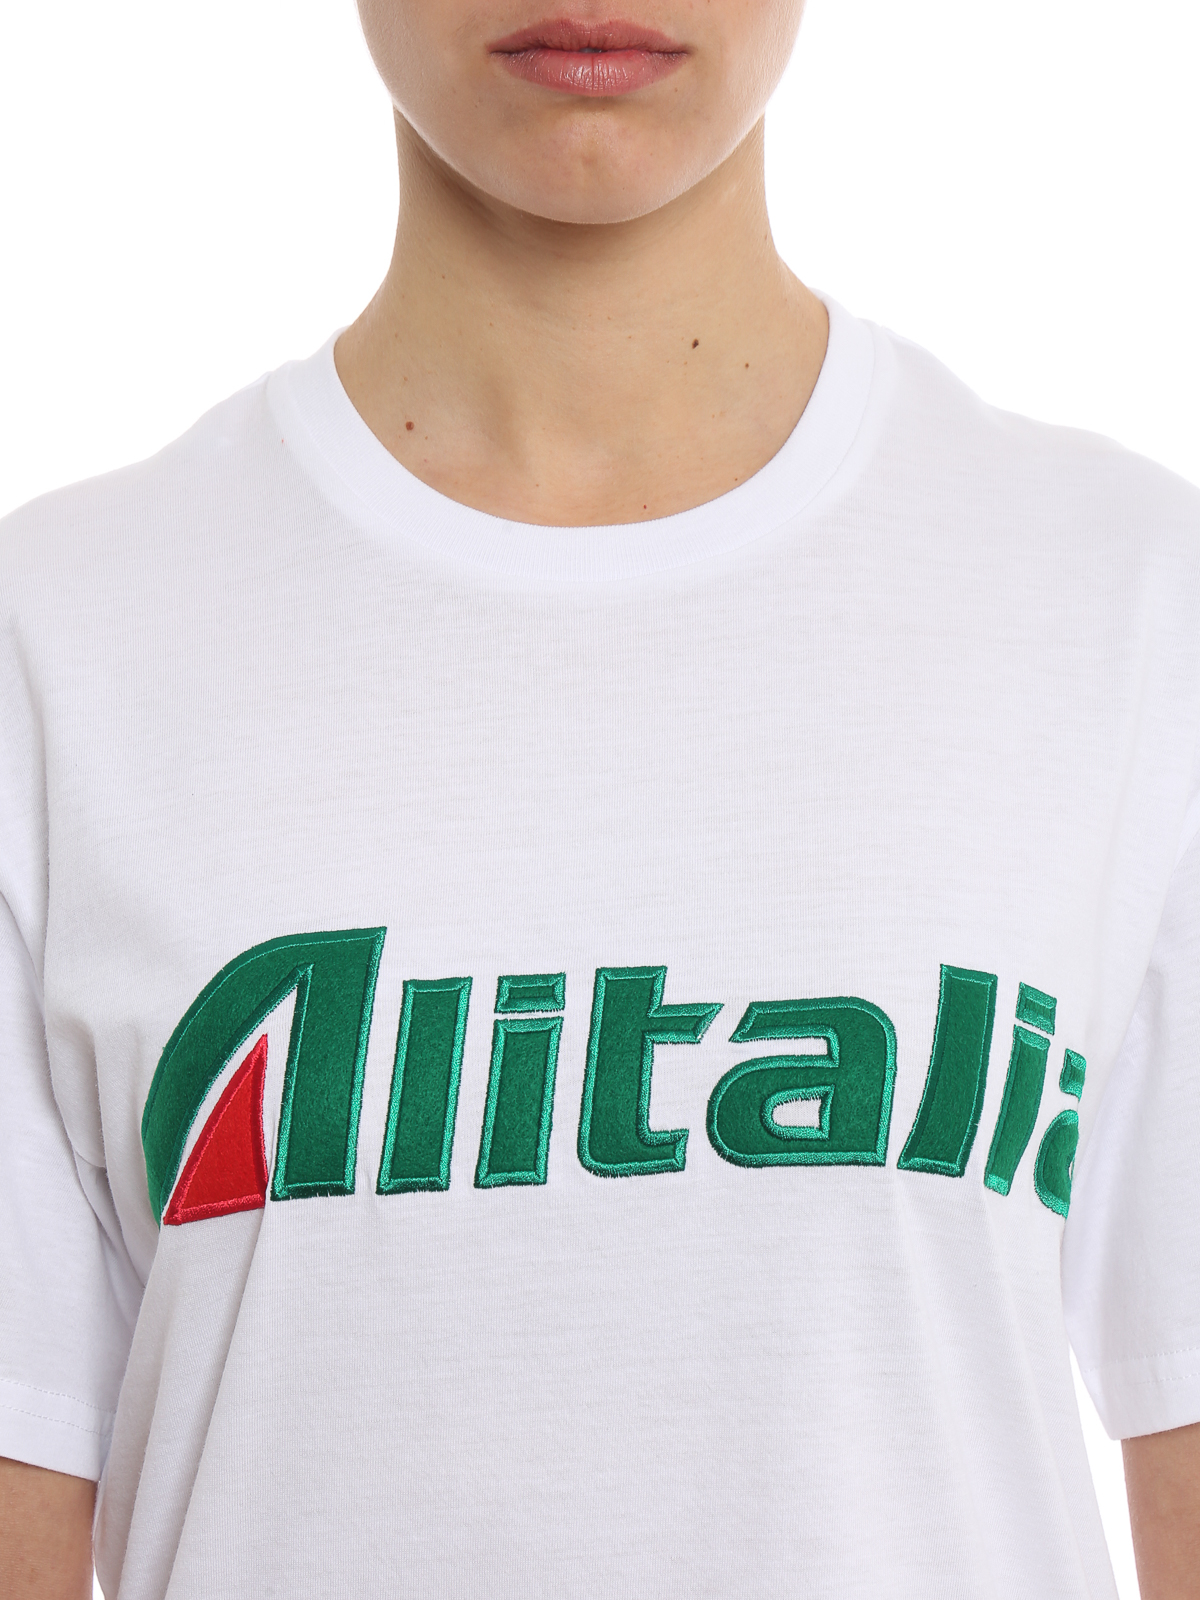 Alberta Ferretti Alitalia embroidered T-shirt - J070116720001